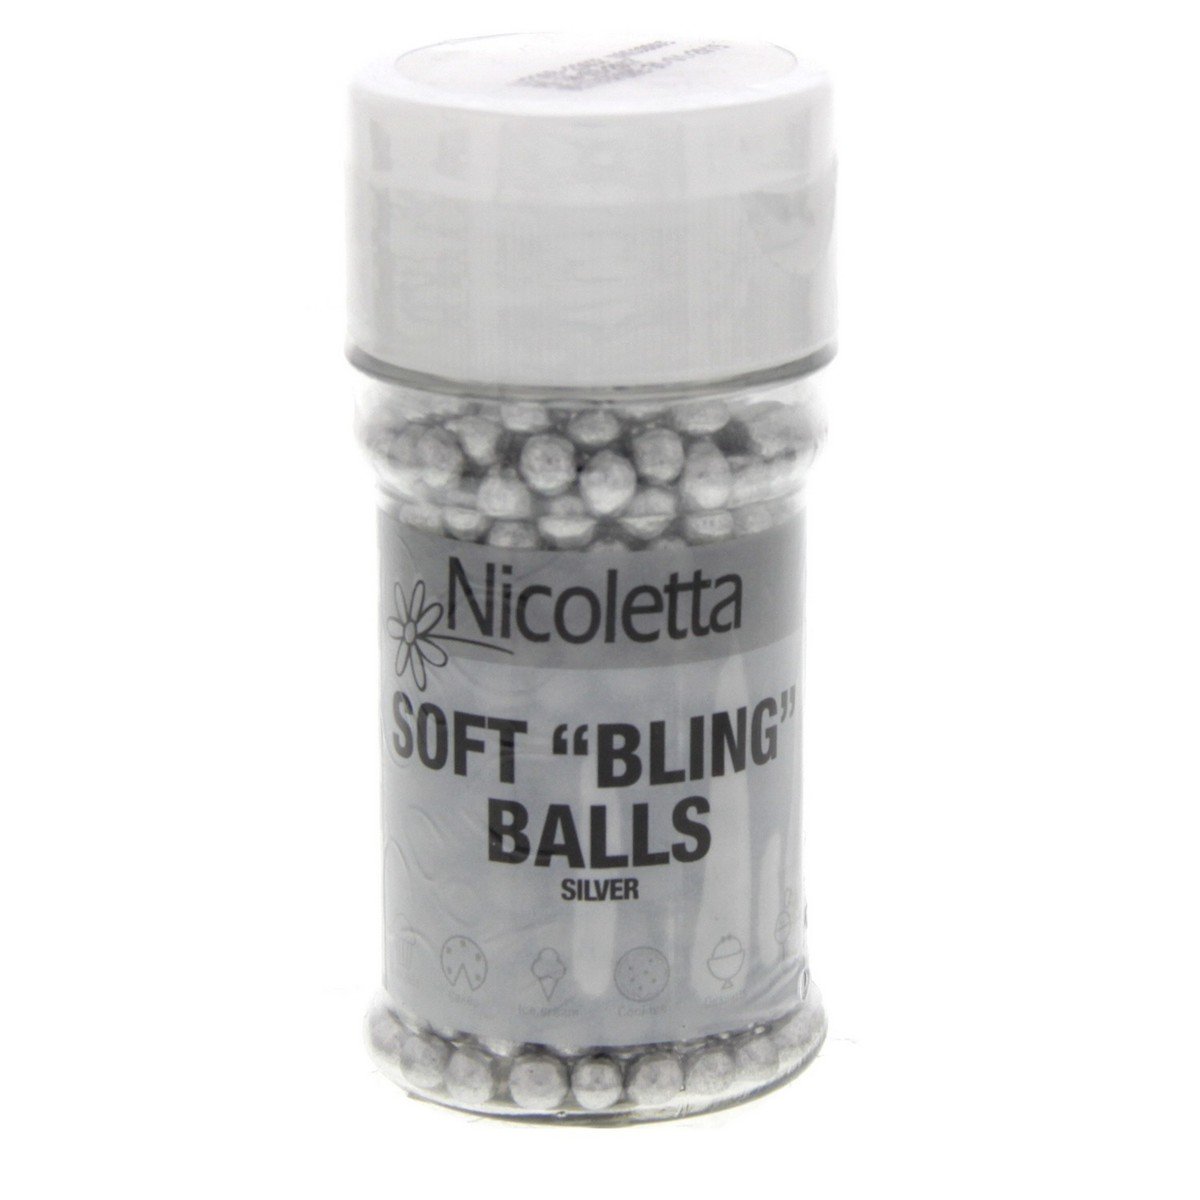 Nicoletta Soft Bling Balls Silver 35 g